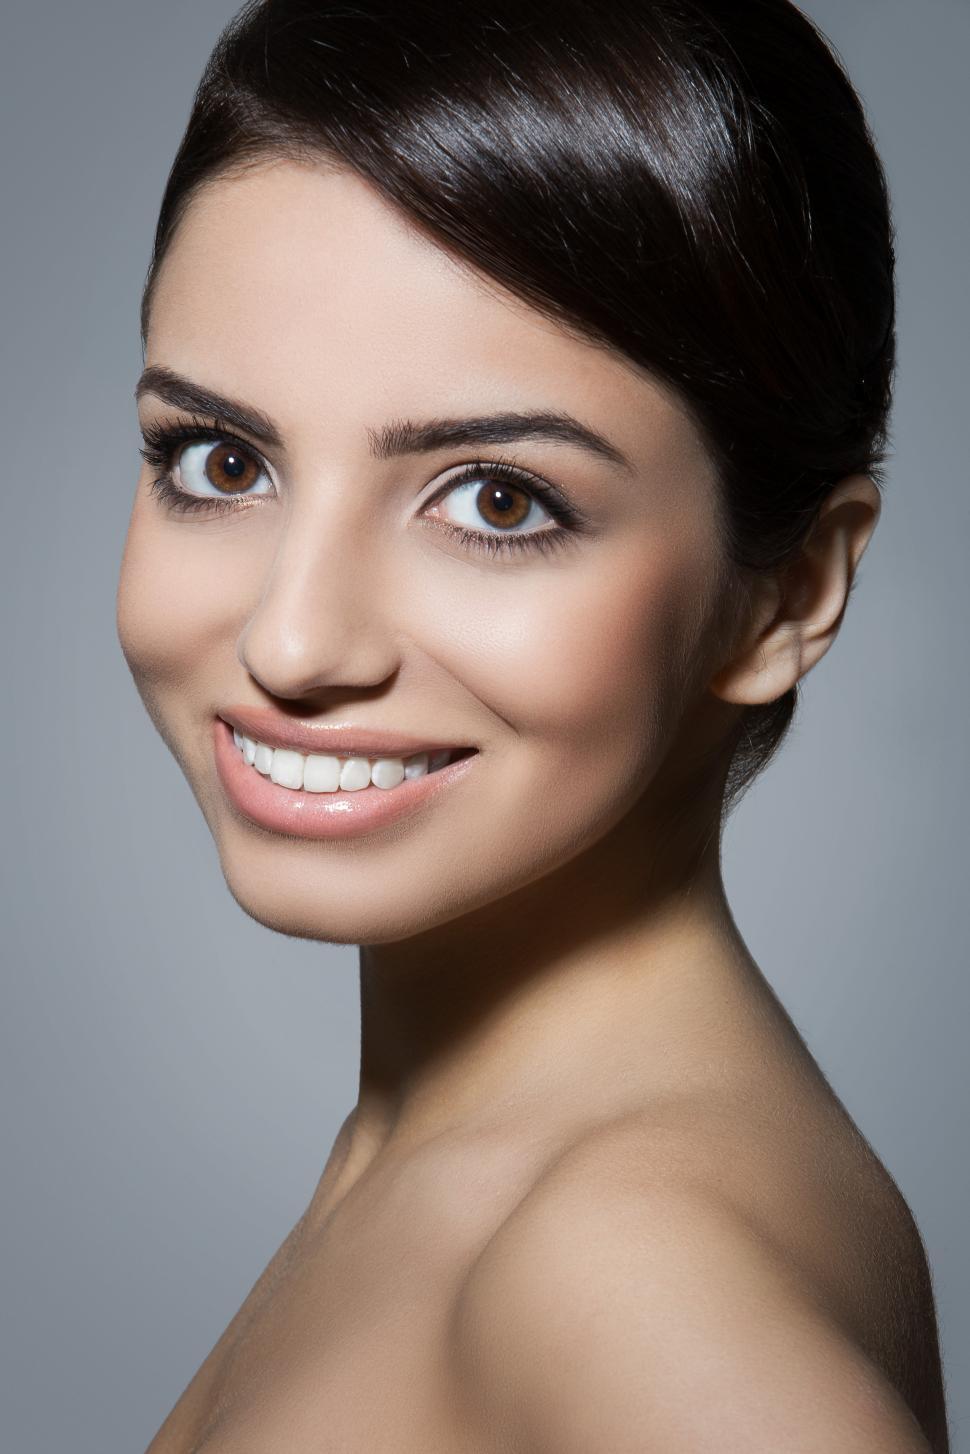 Free Image of Skincare. Smiling, natural girl 